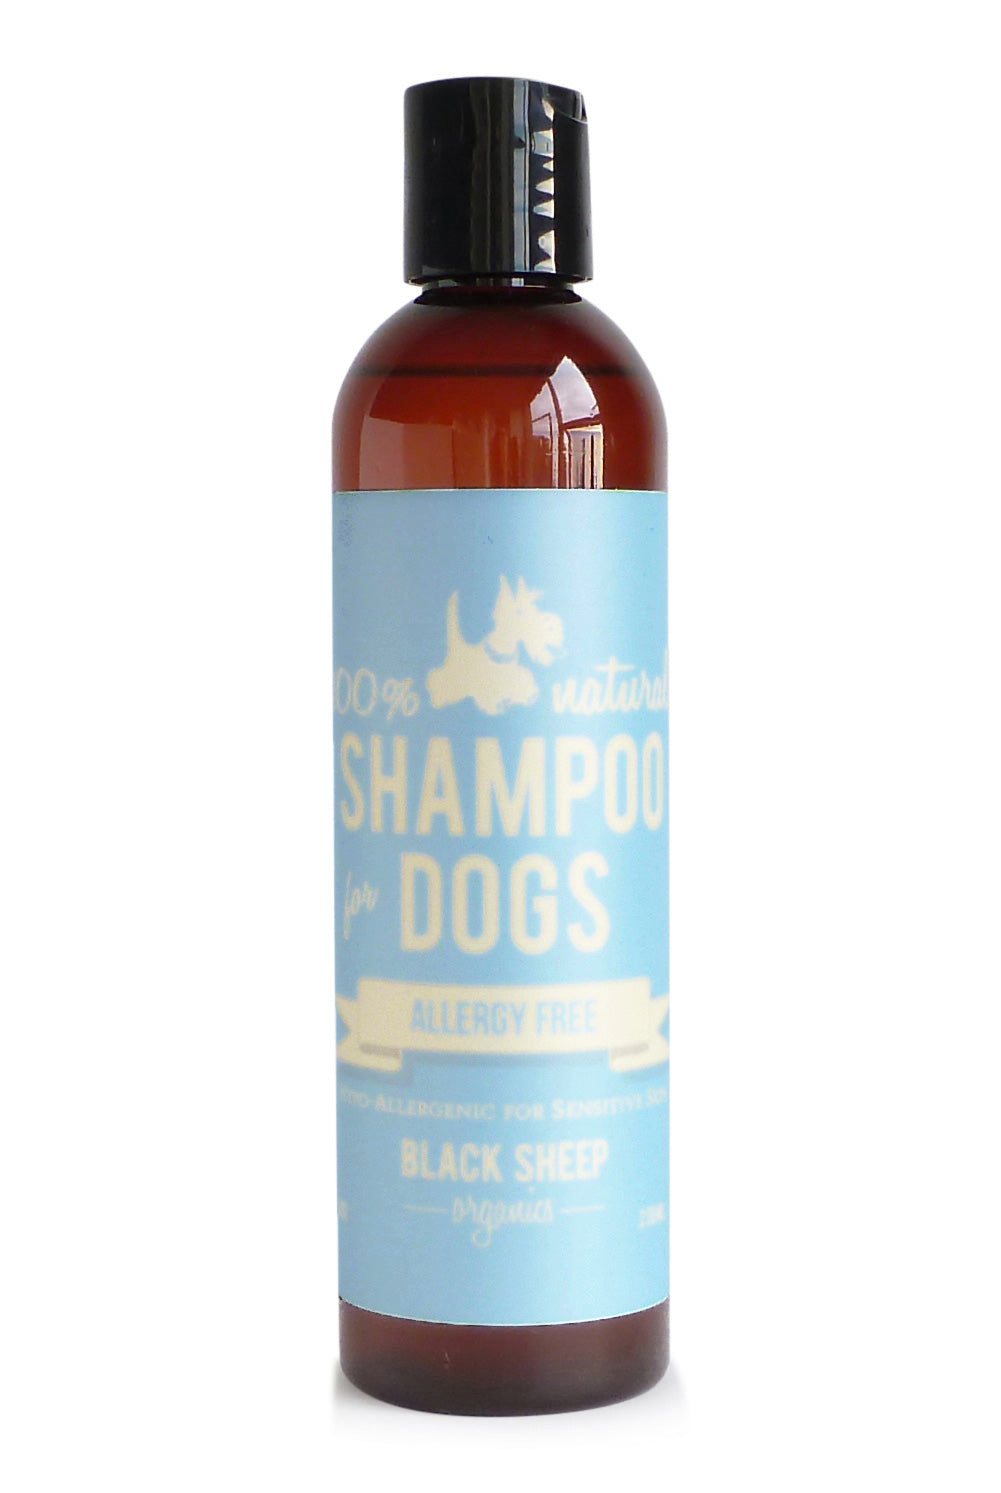 Black Sheep Organics - Allergy Free Organic Shampoo